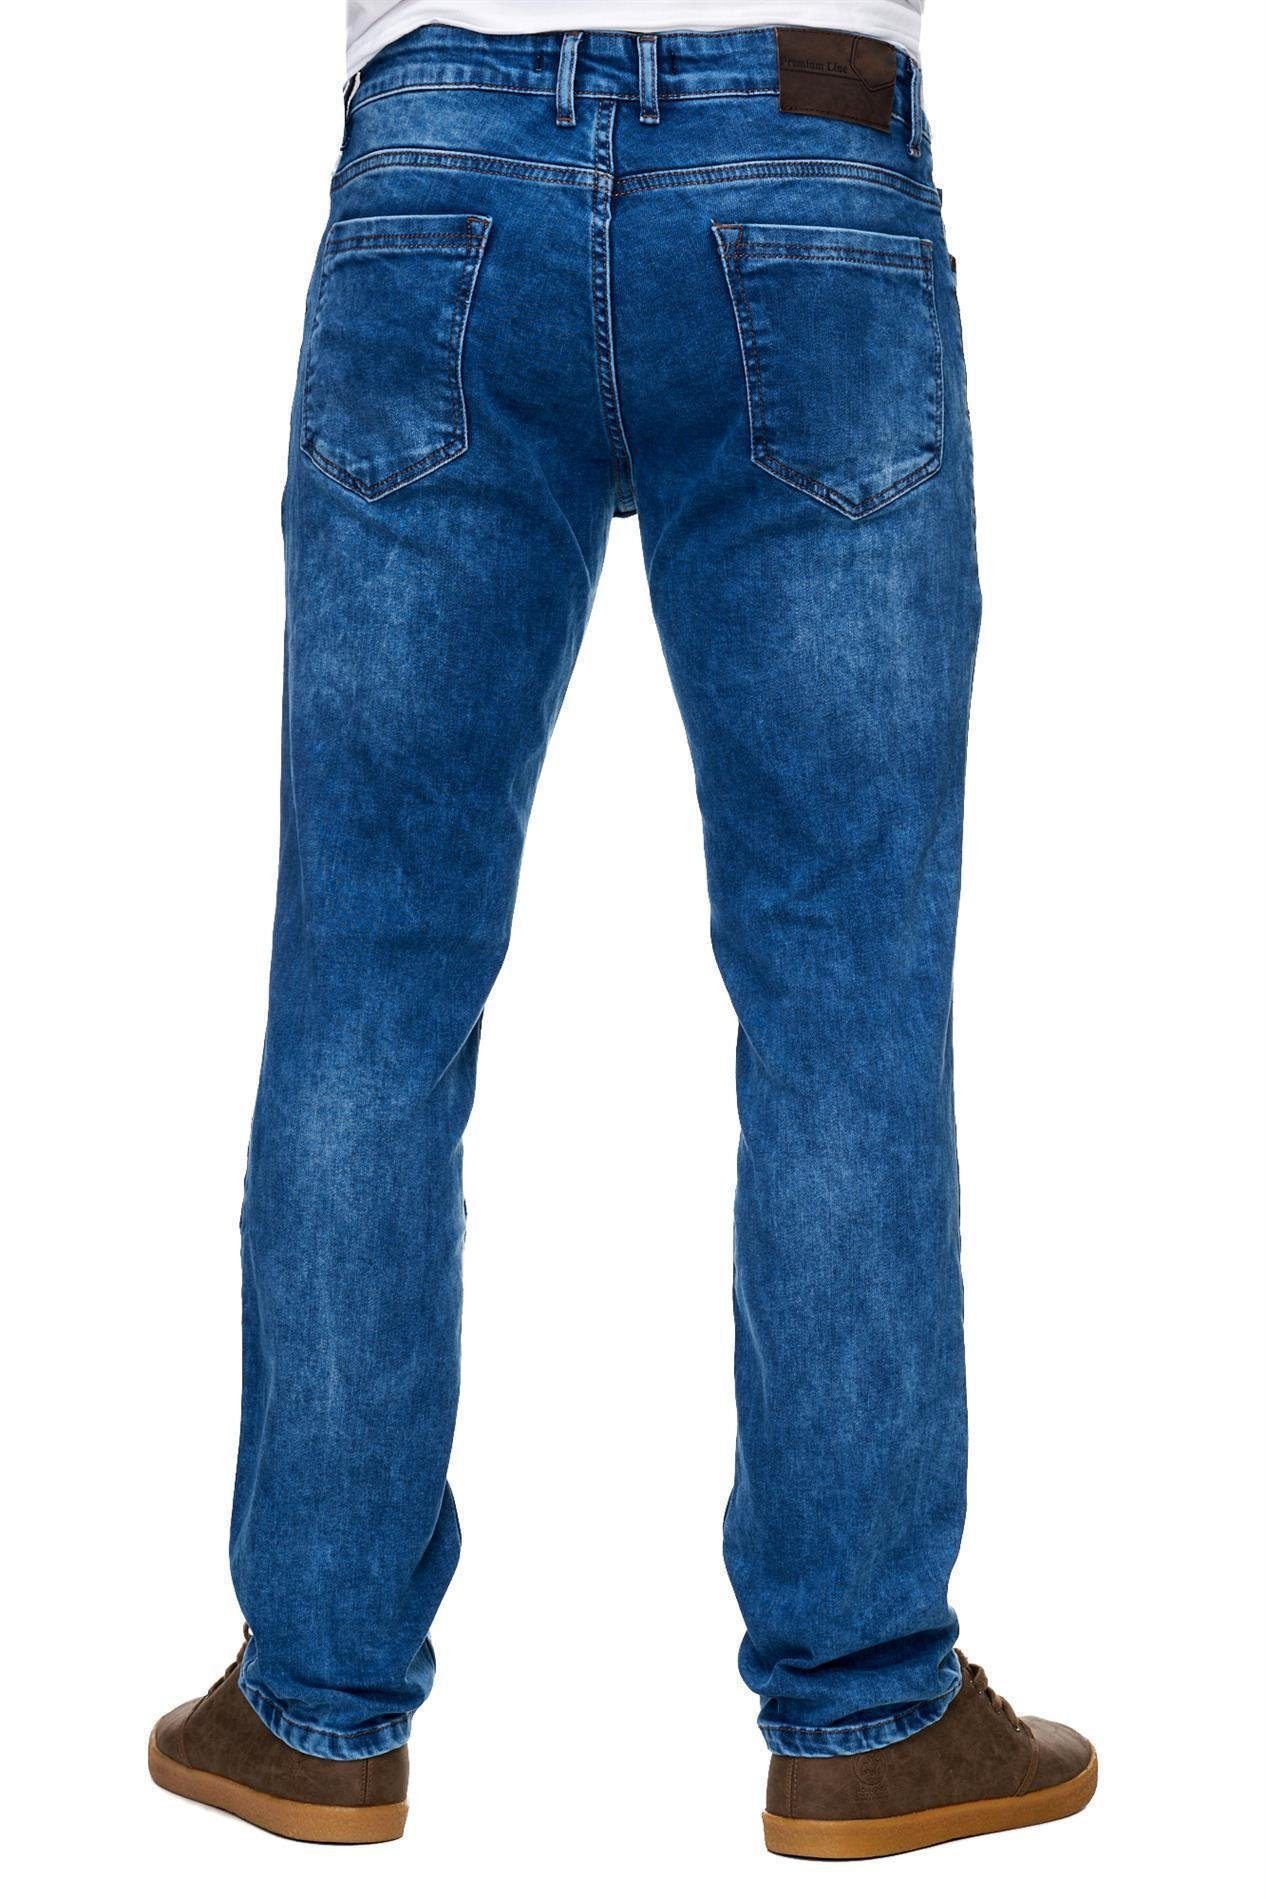 Reslad Stretch-Jeans Reslad Jeans-Herren Slim Jeans-Hose Style Stretch-Denim blau Stretch Basic Slim Jeans-Hose Fit Fit